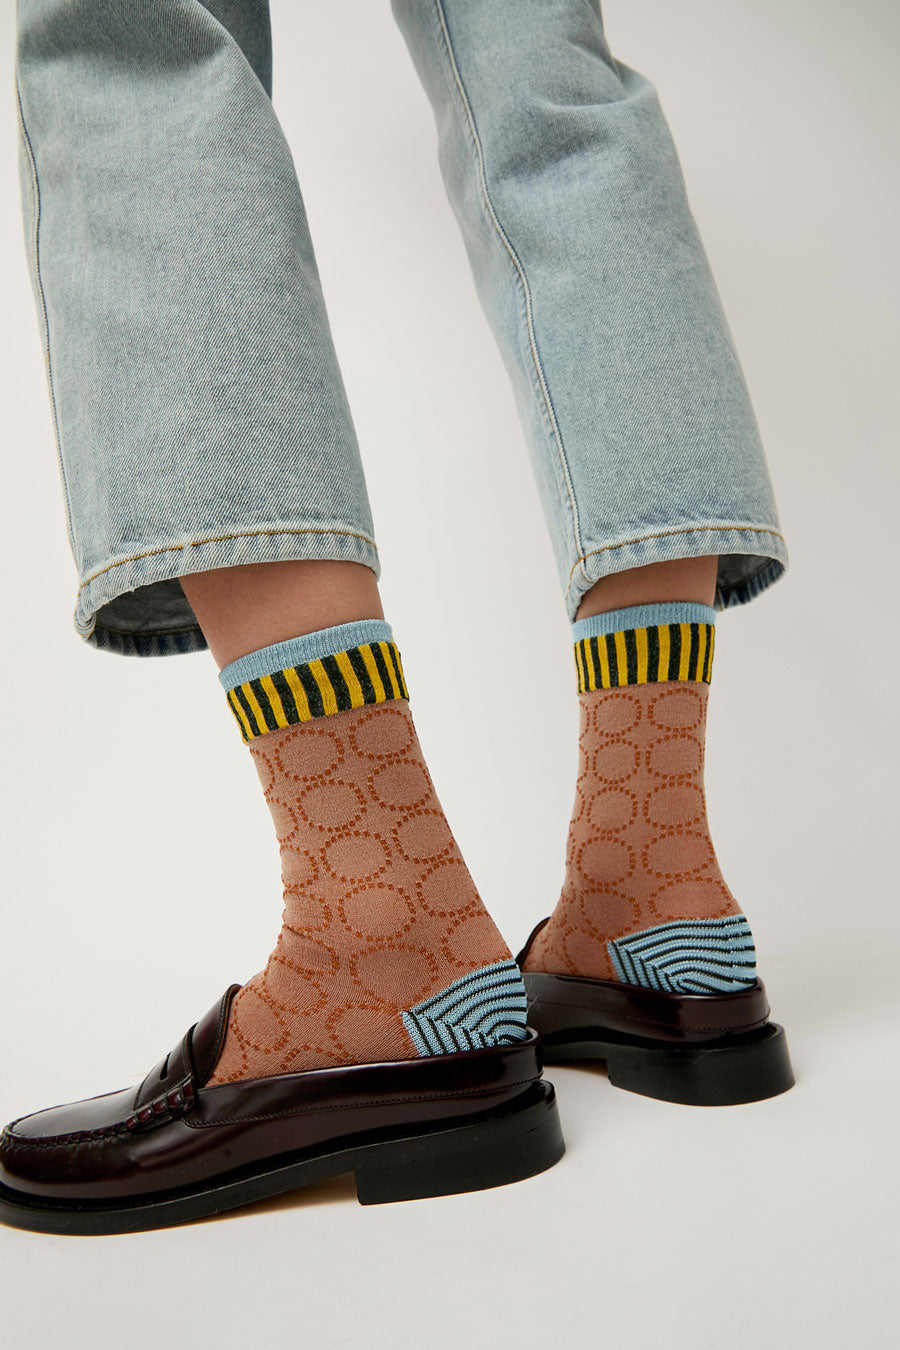 Exquisite J Jacquard Circles Socks in Mocha